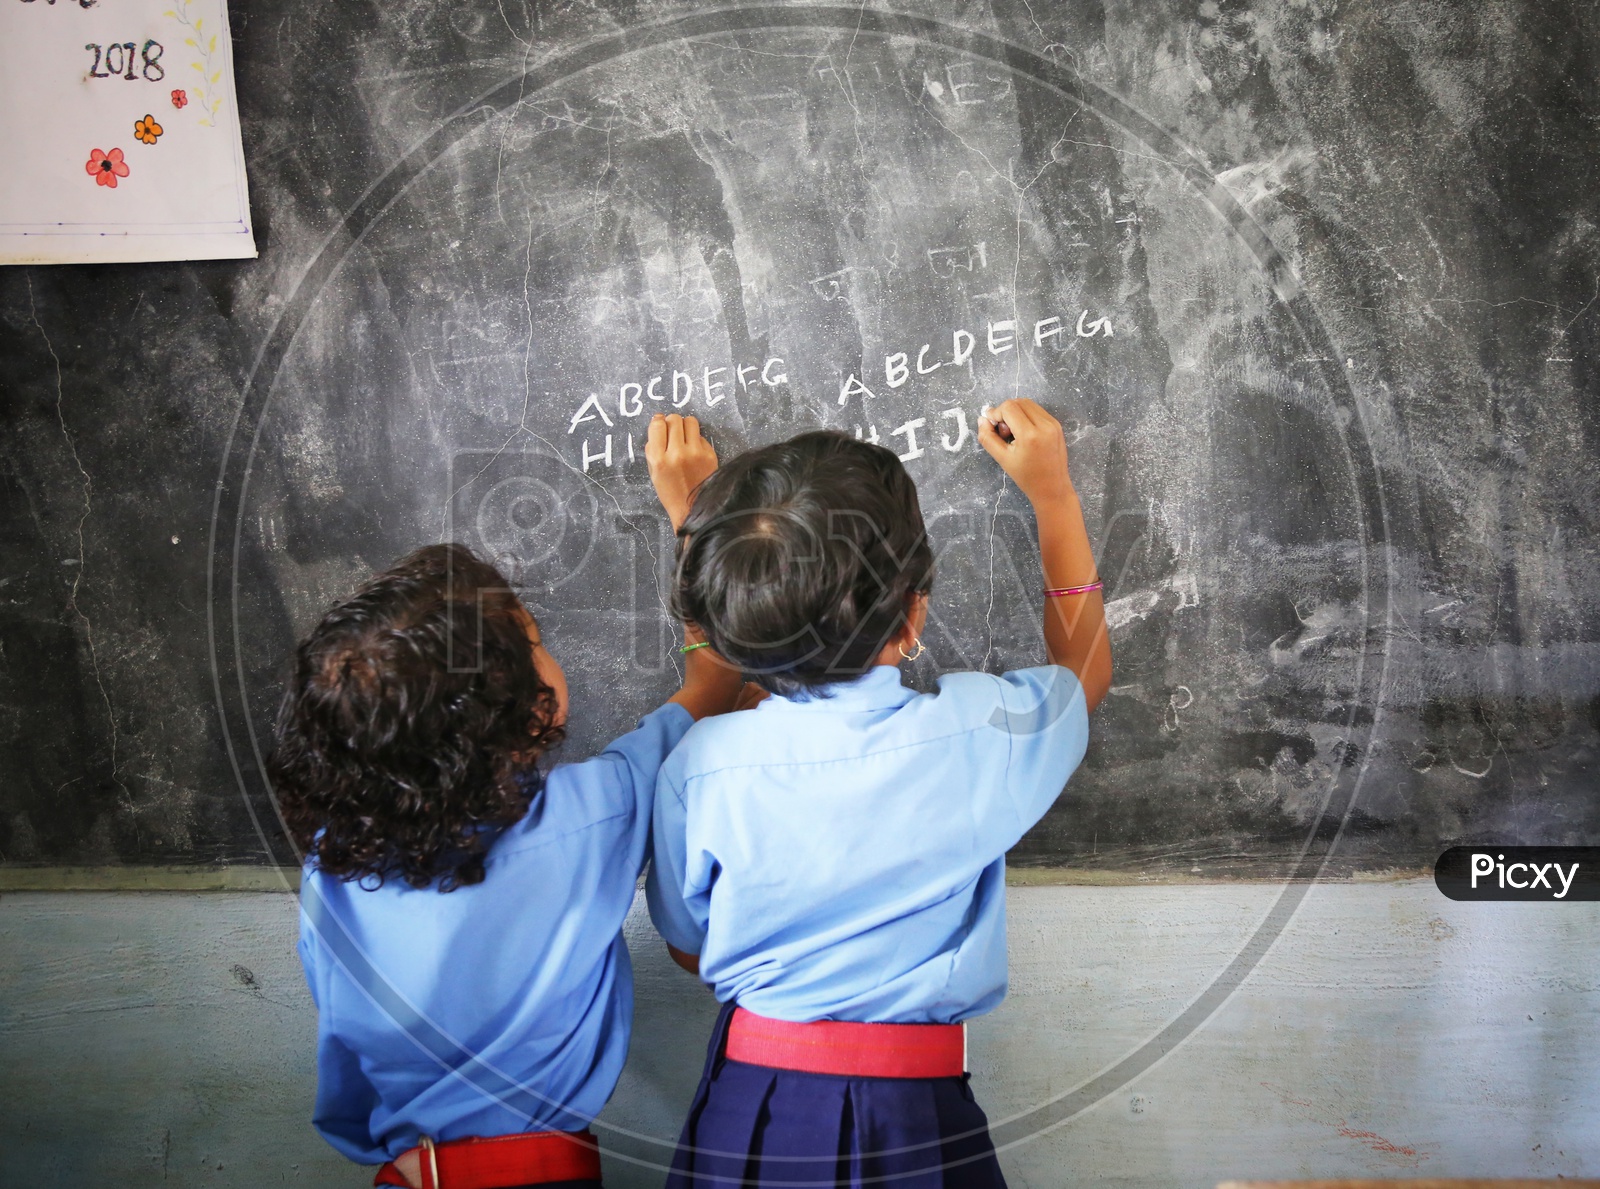 Girl Children Or Girl Students Writing On the Classroom Blackboard